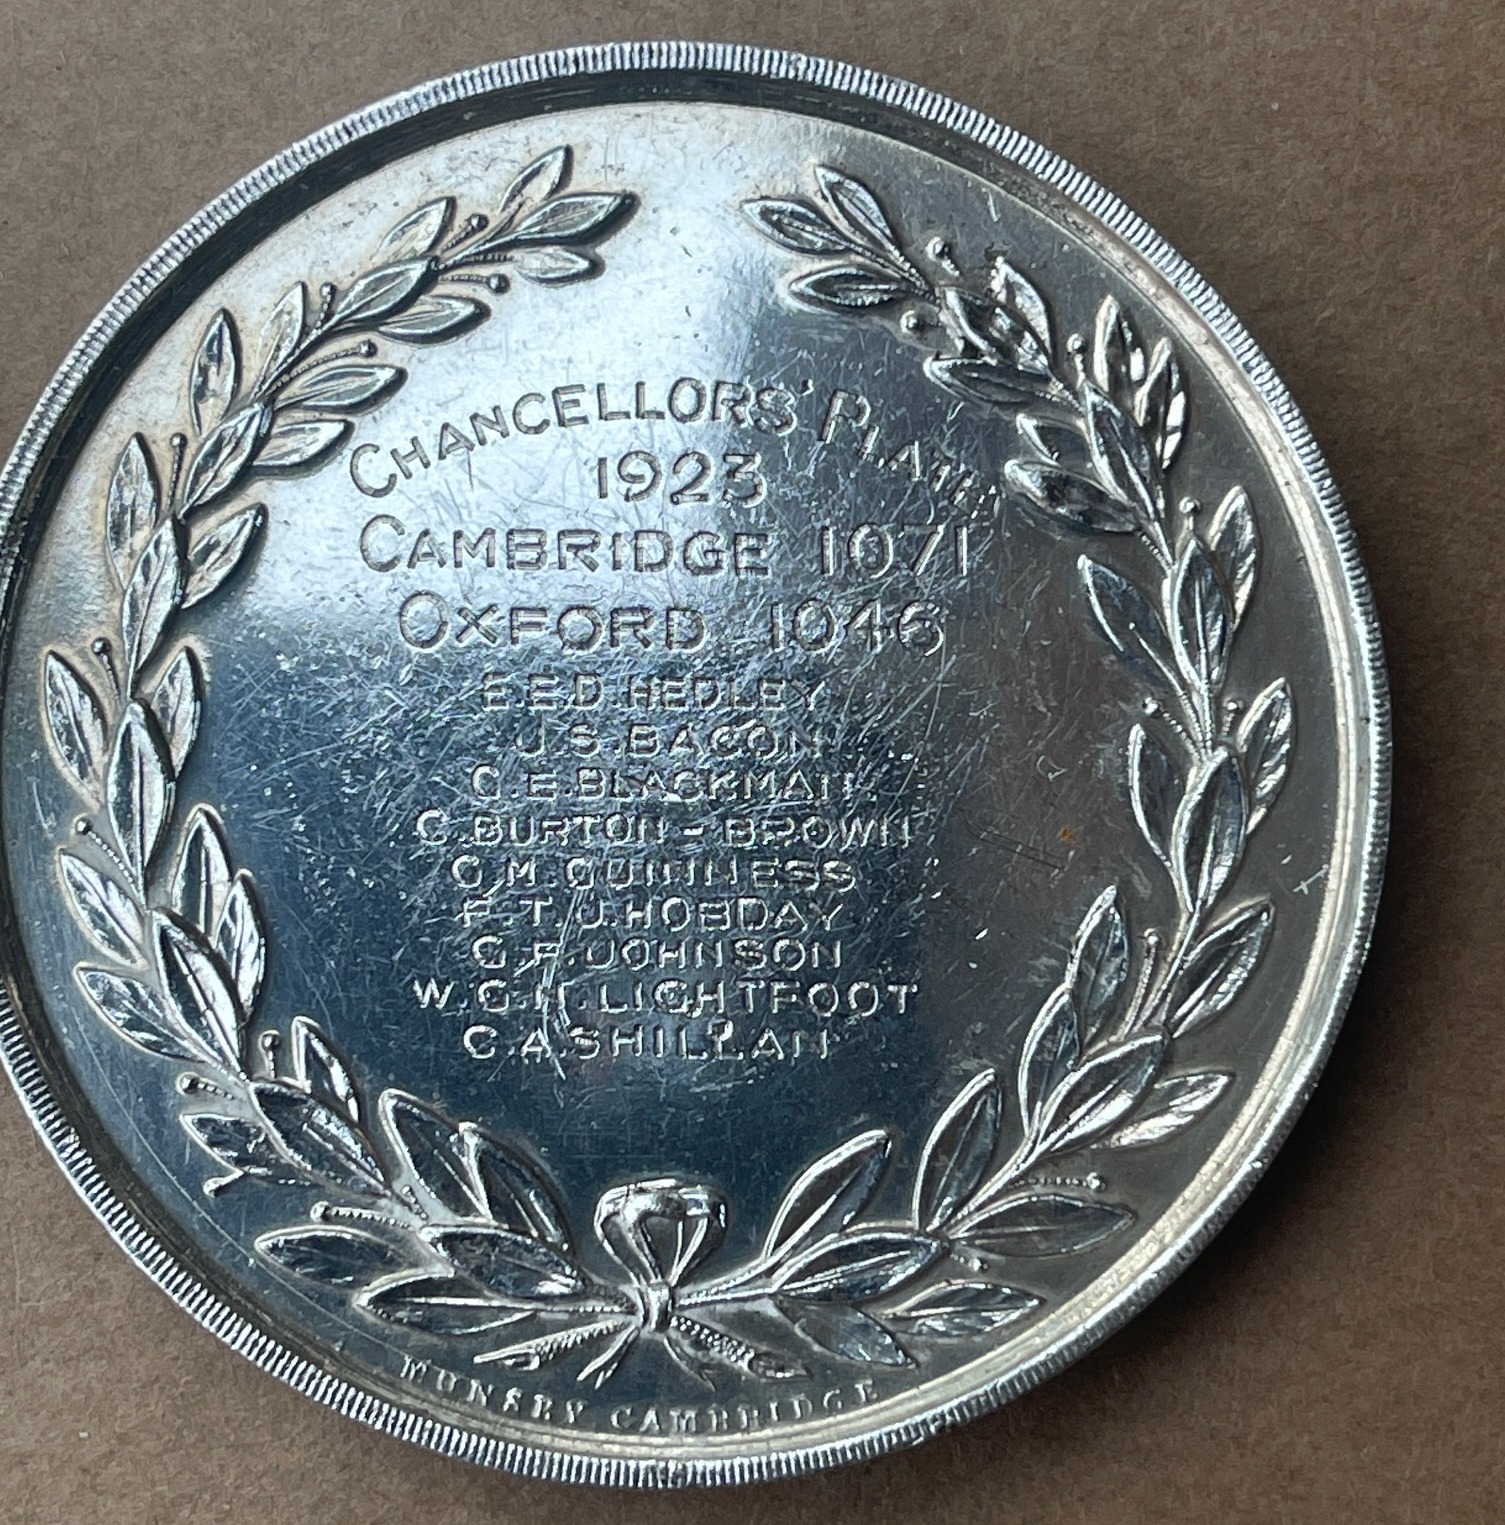 Cambridge University Chancellors Plate 1923 Medal vs Oxford - 50mm diameter.